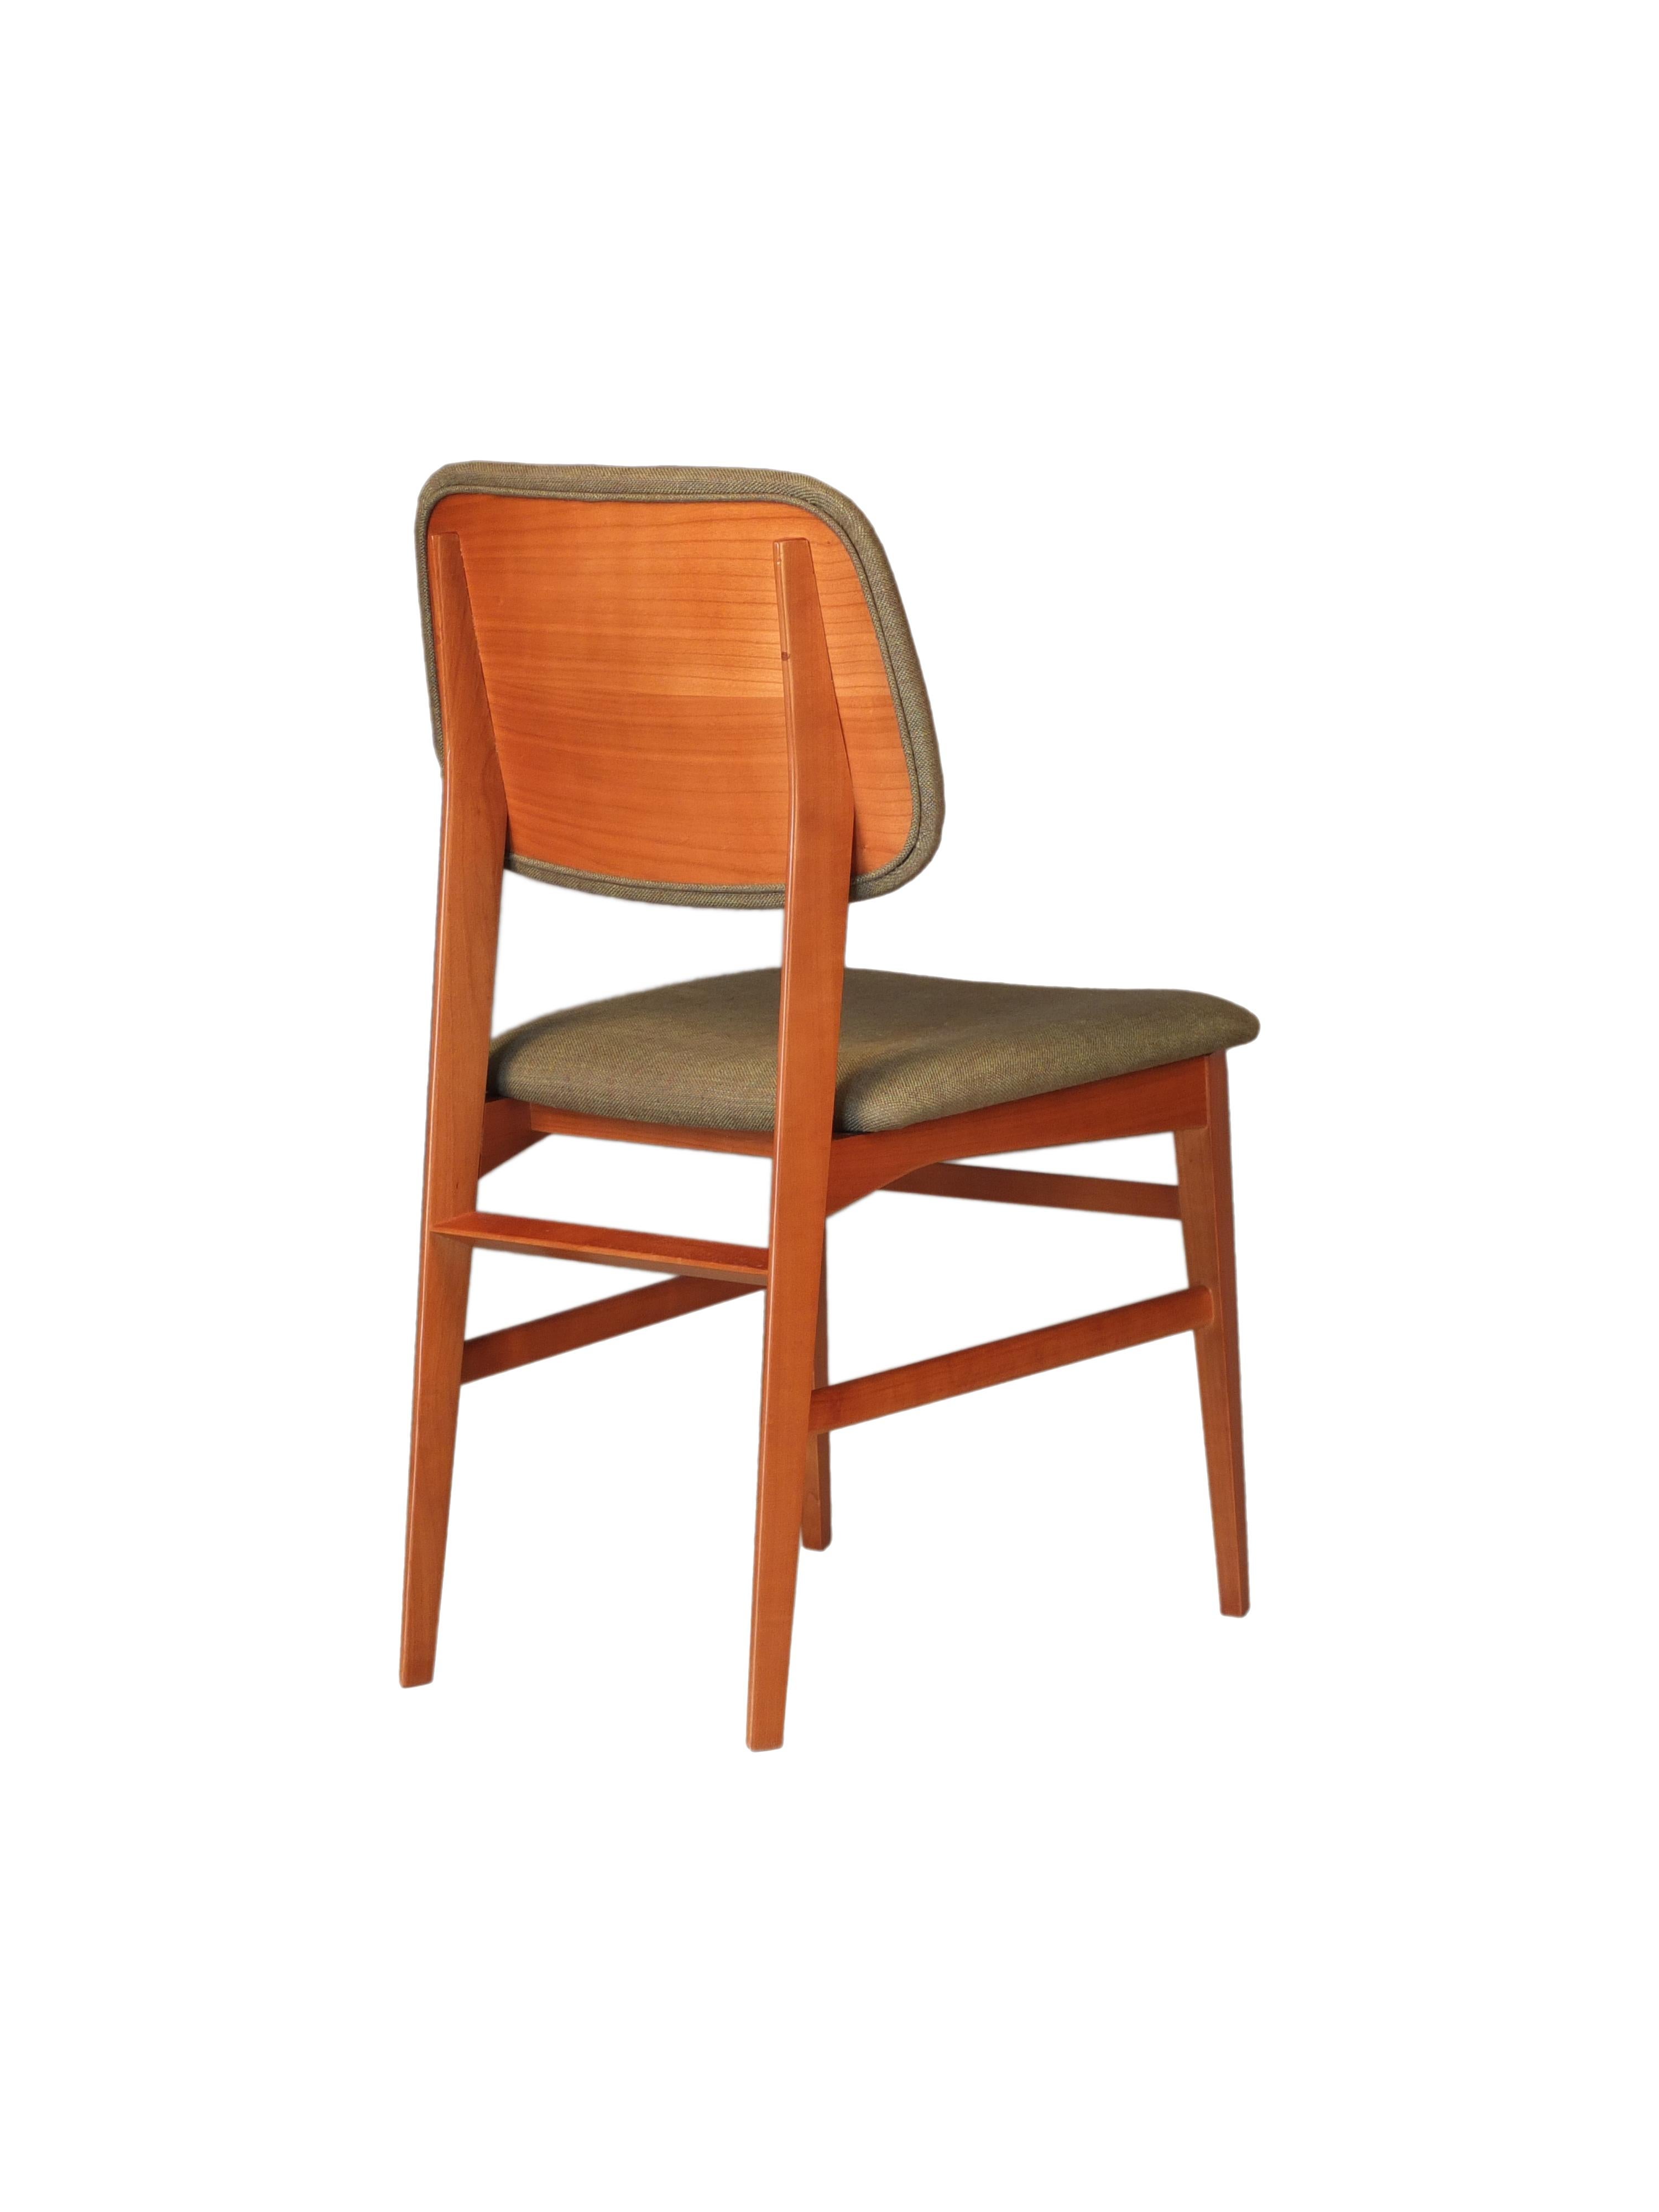 Leather Morelato, Savina Chair in Ash Wood